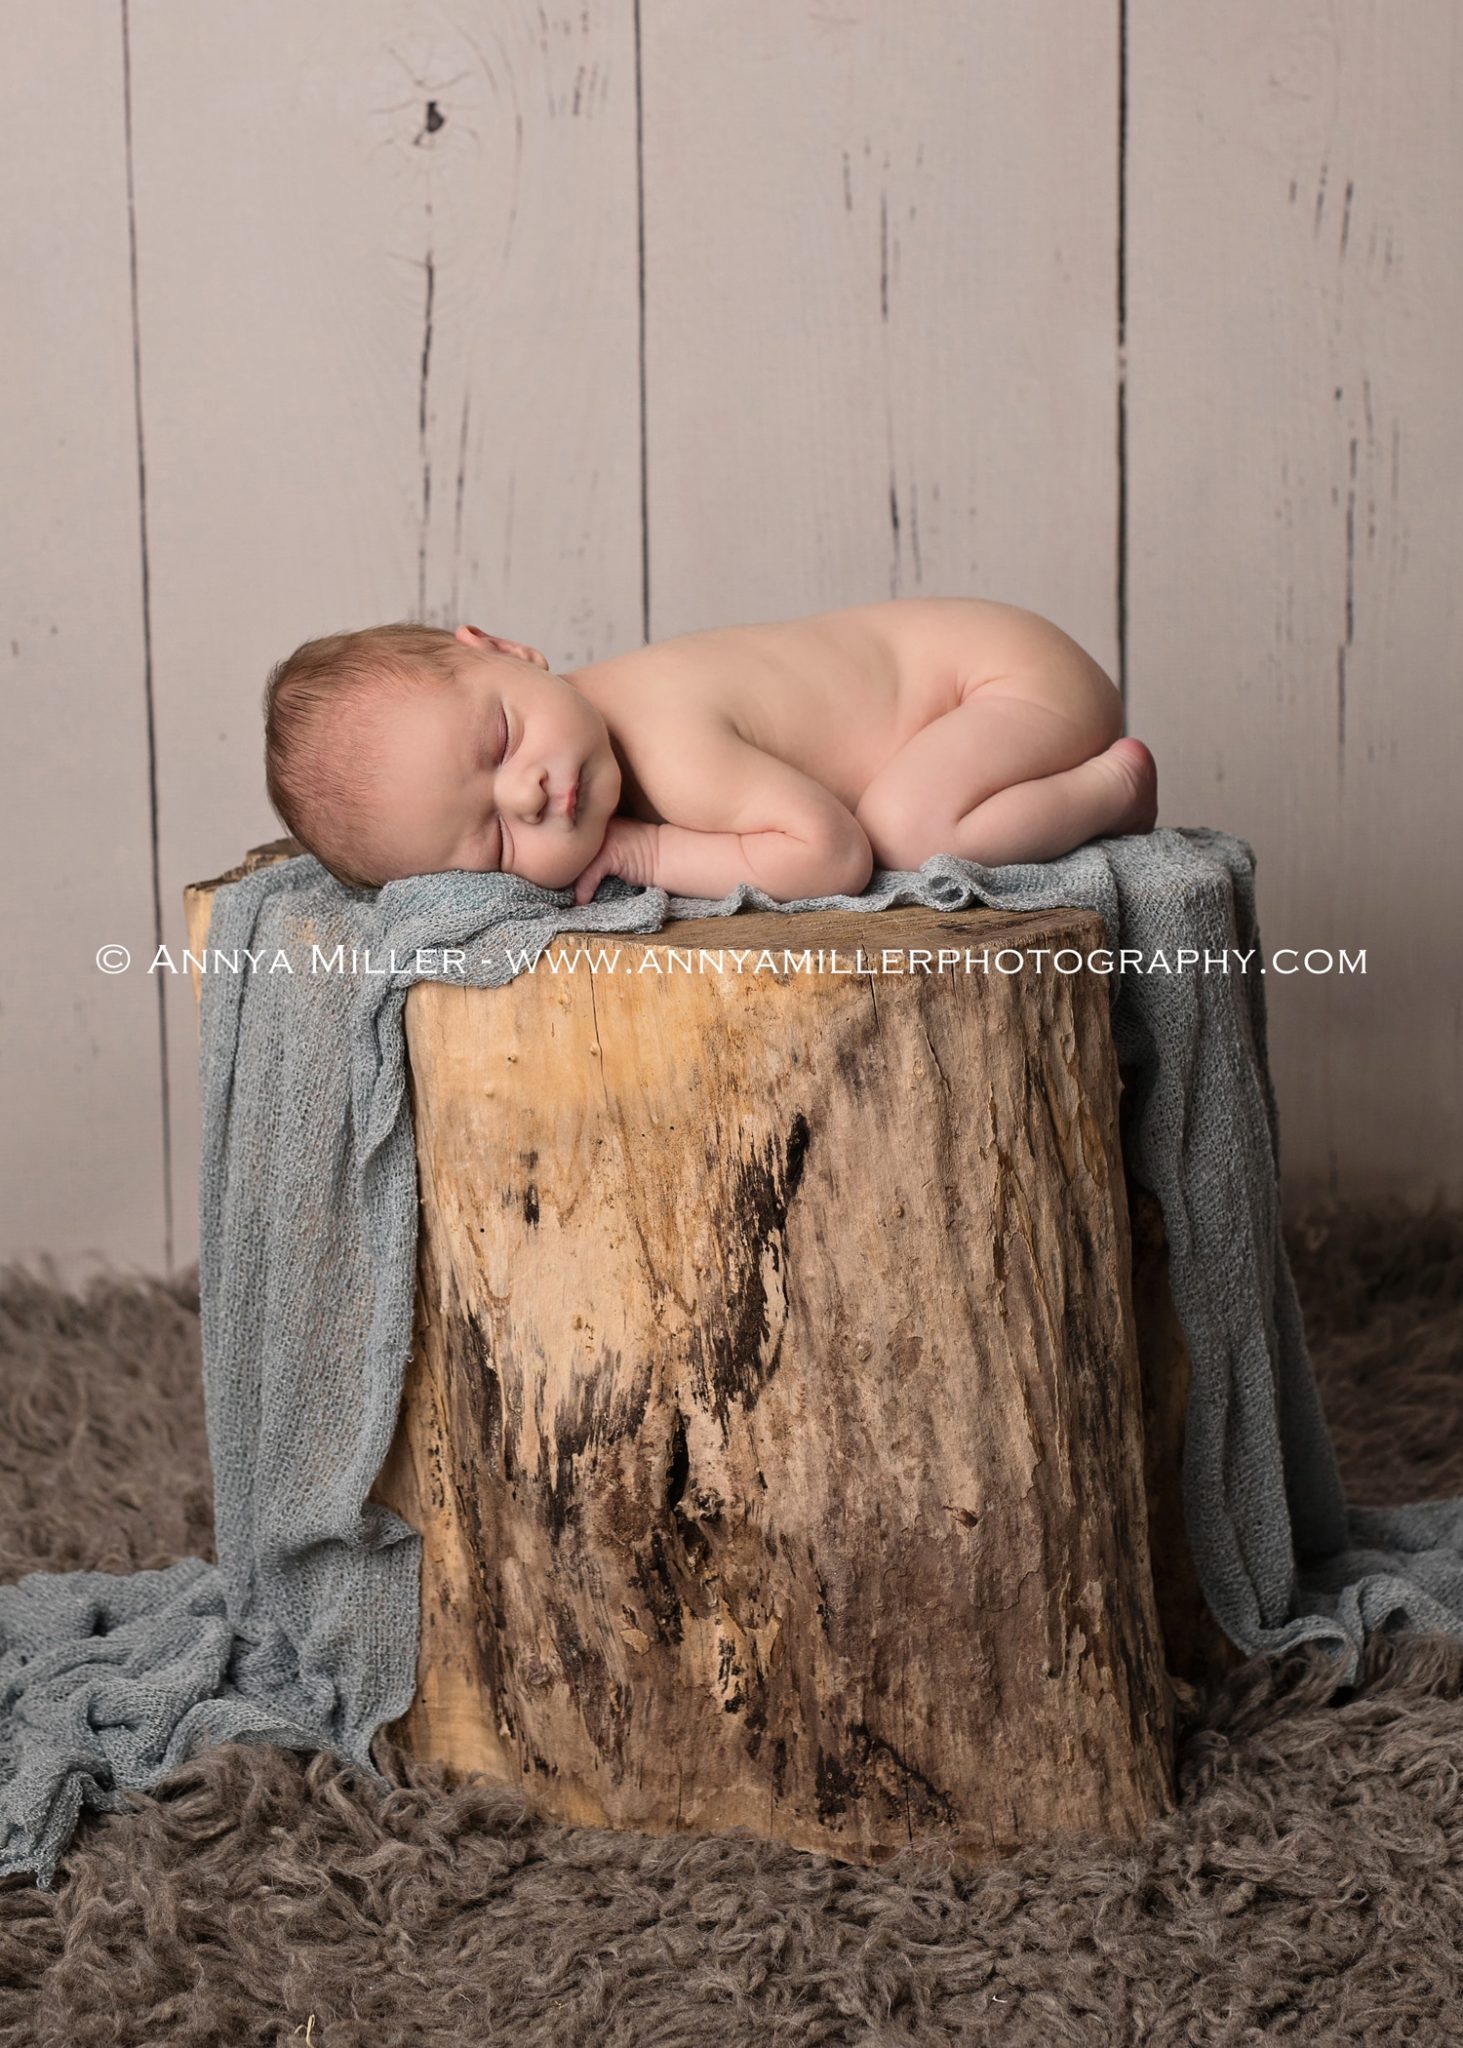 Local newborn photography by Durham Region photographer Annya Miller